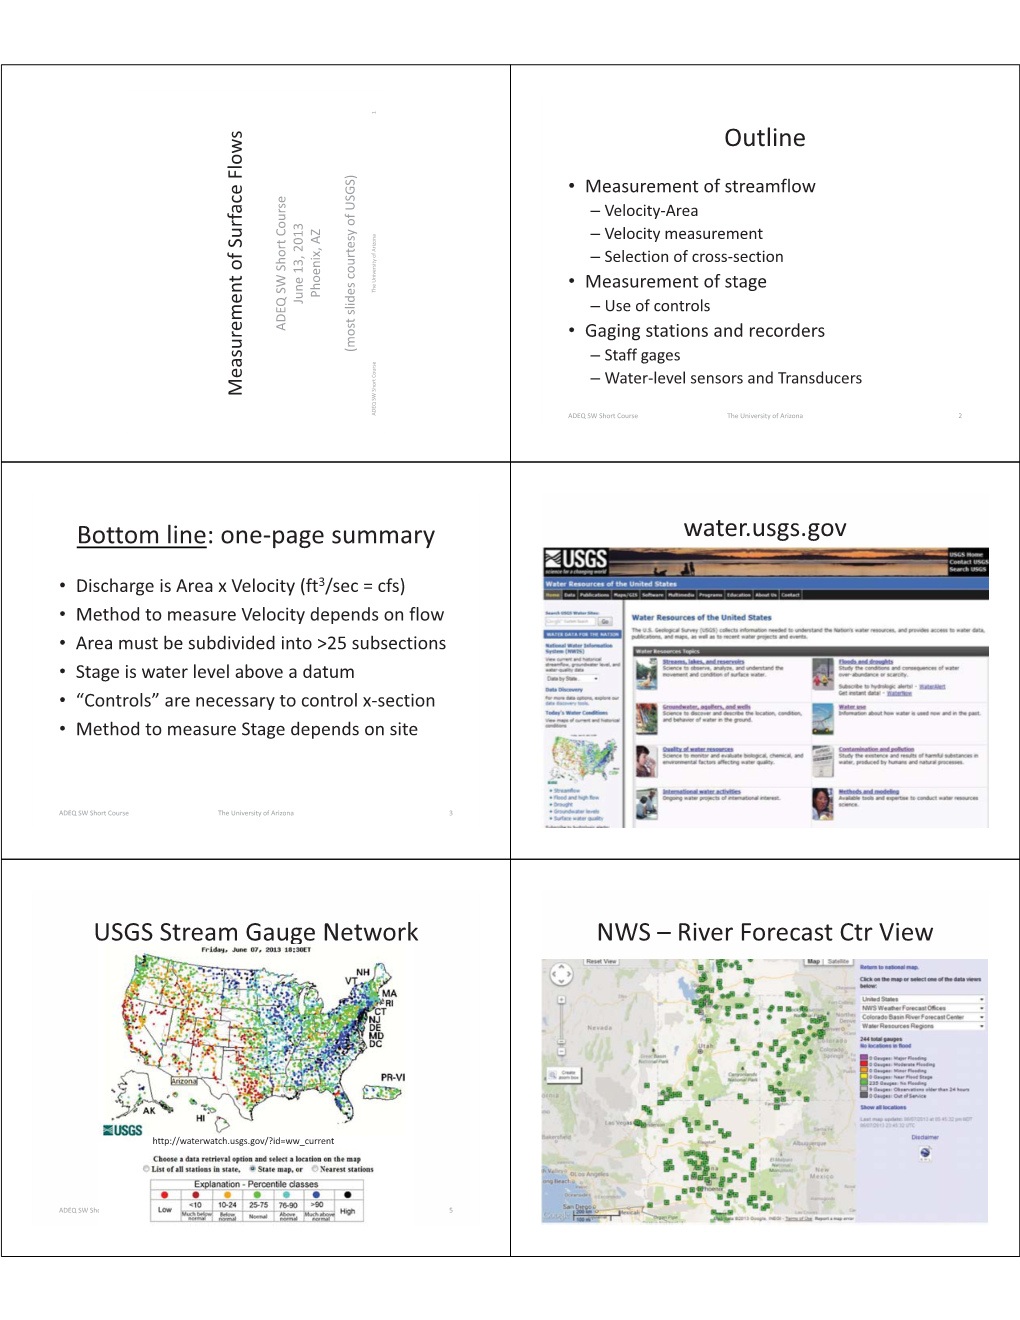 One Page Summary Water.Usgs.Gov USGS Stream Gauge Network